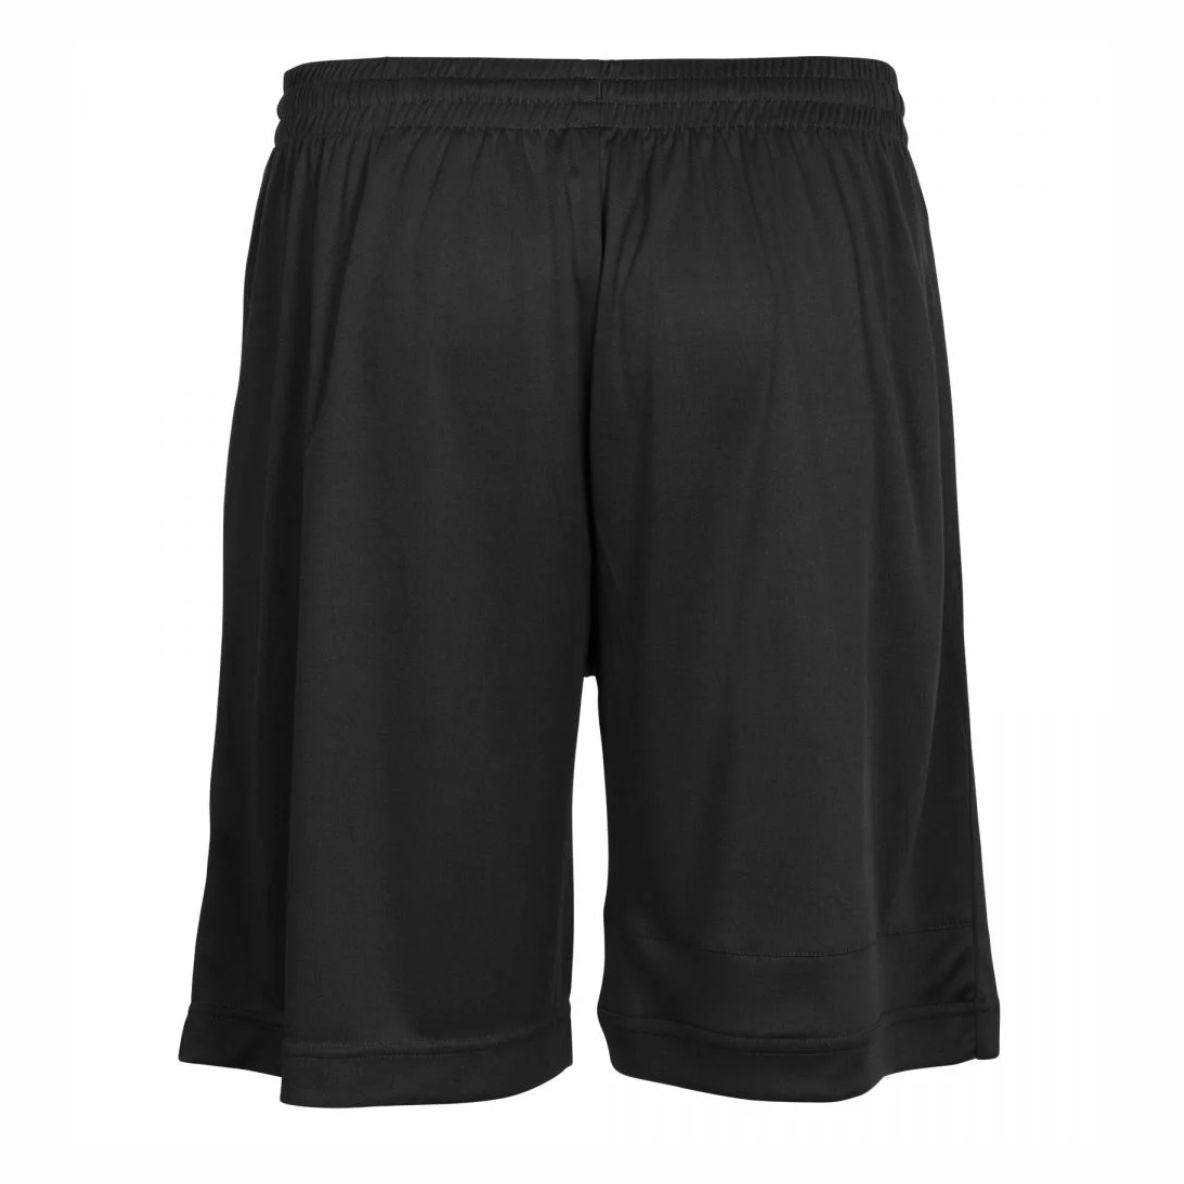 Stanno - Field Shorts - Black